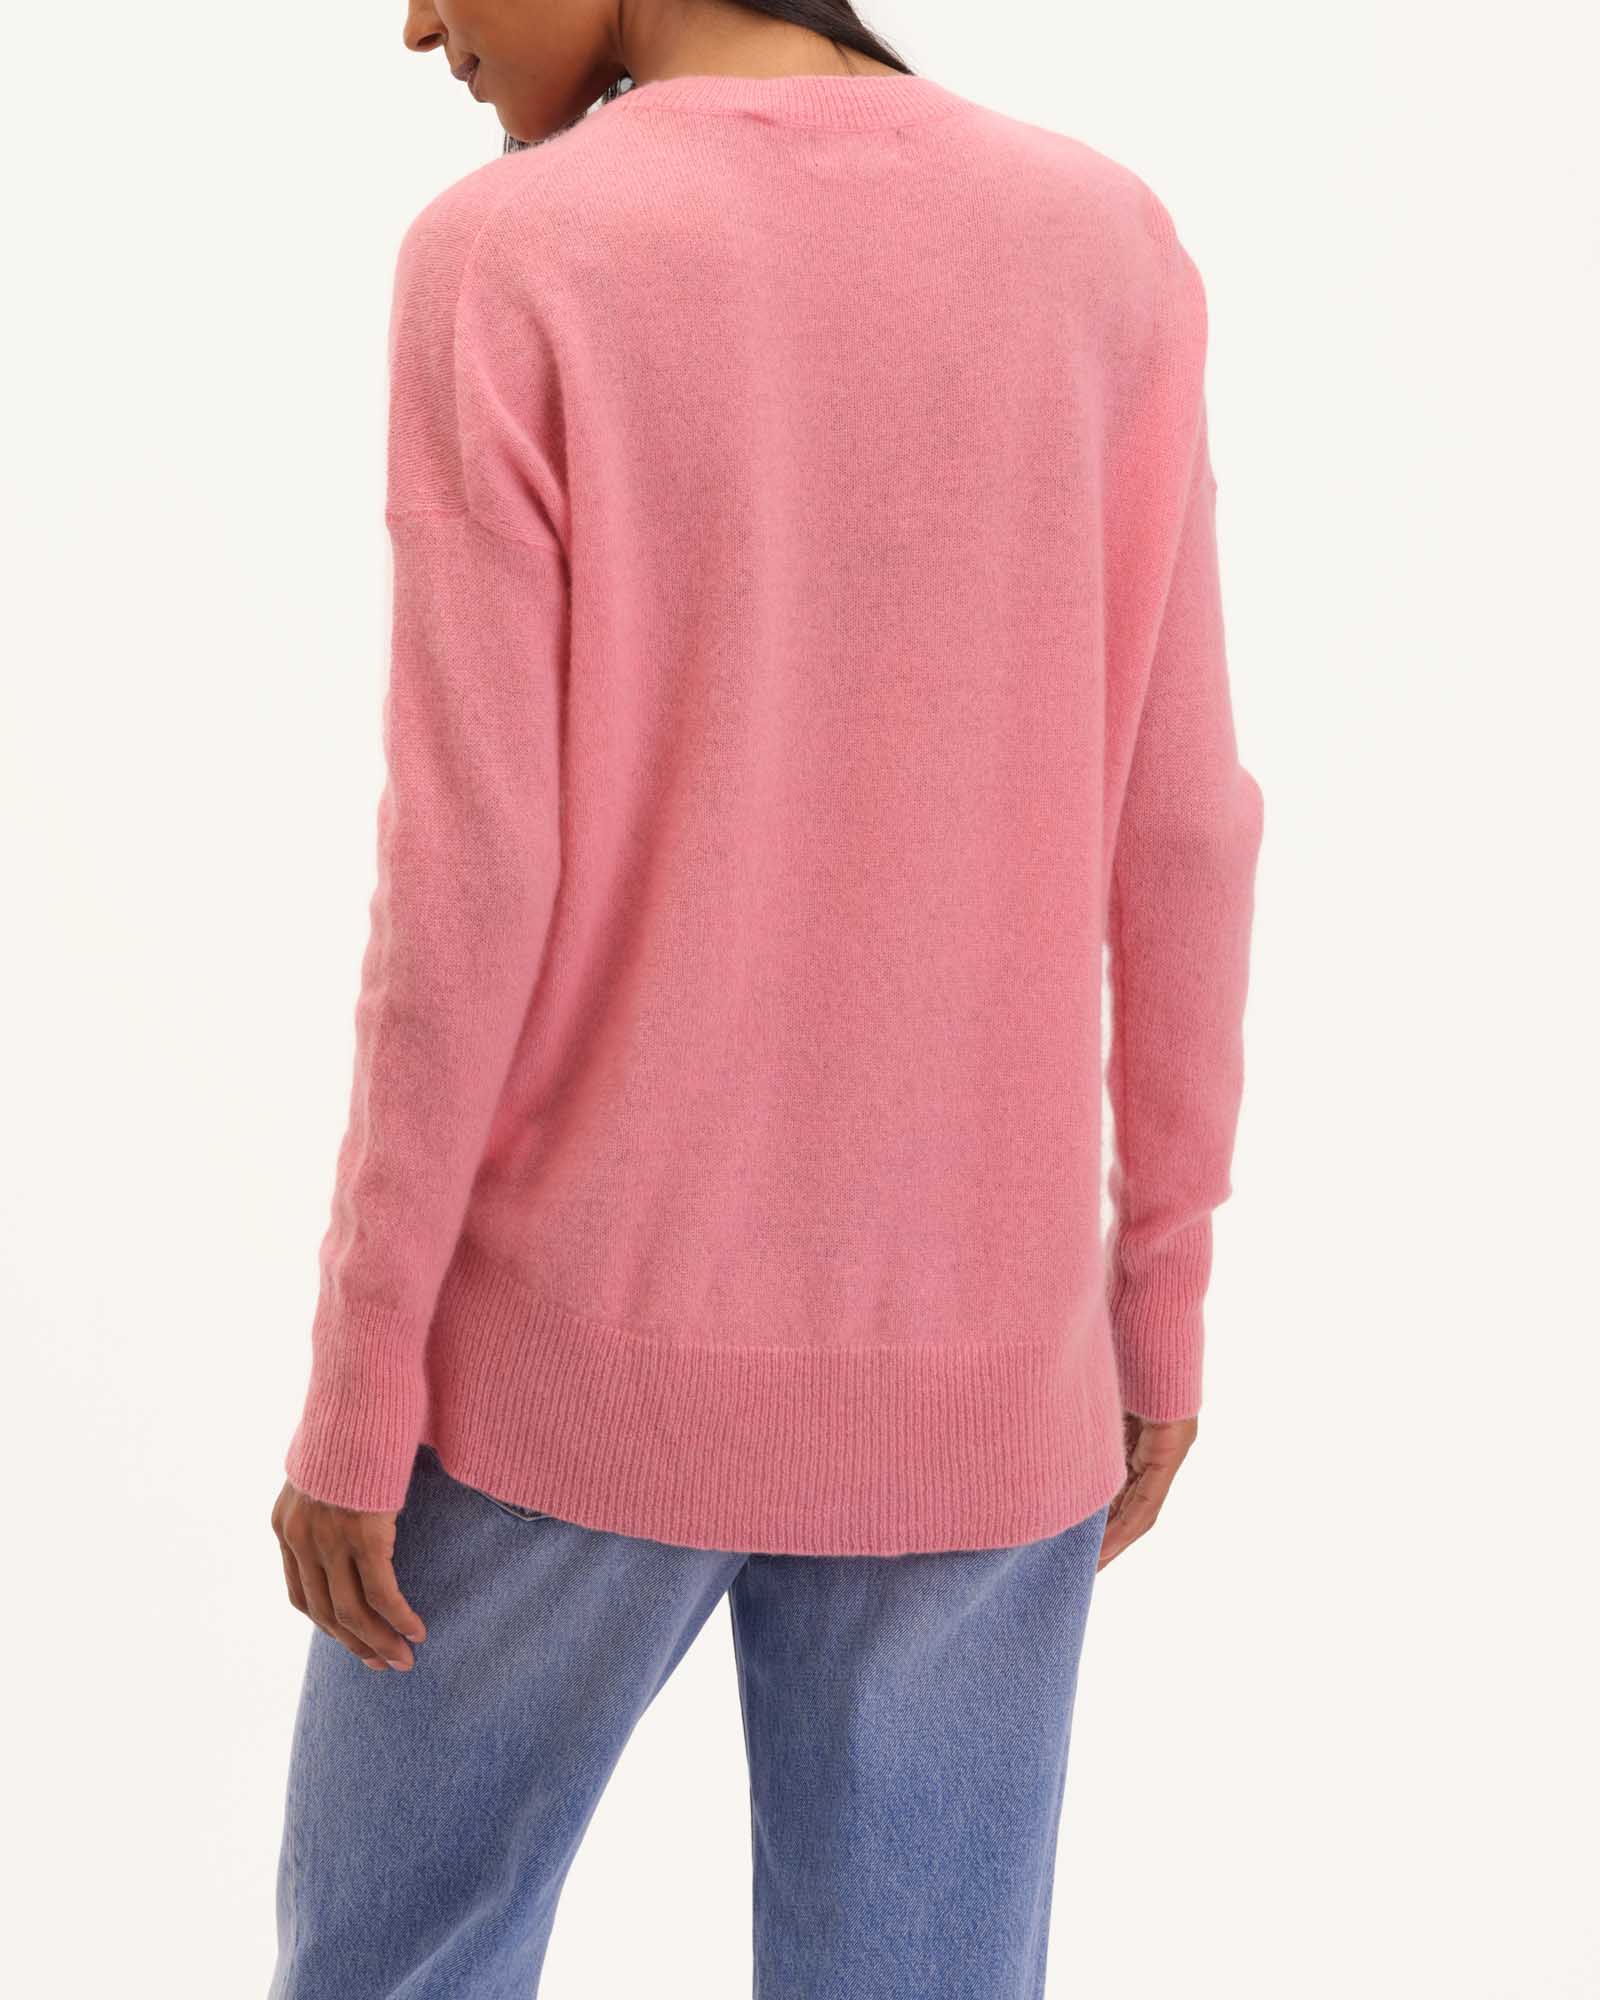 T Tahari Women's Classic Cashmere Crewneck Sweater - Pink Rouge